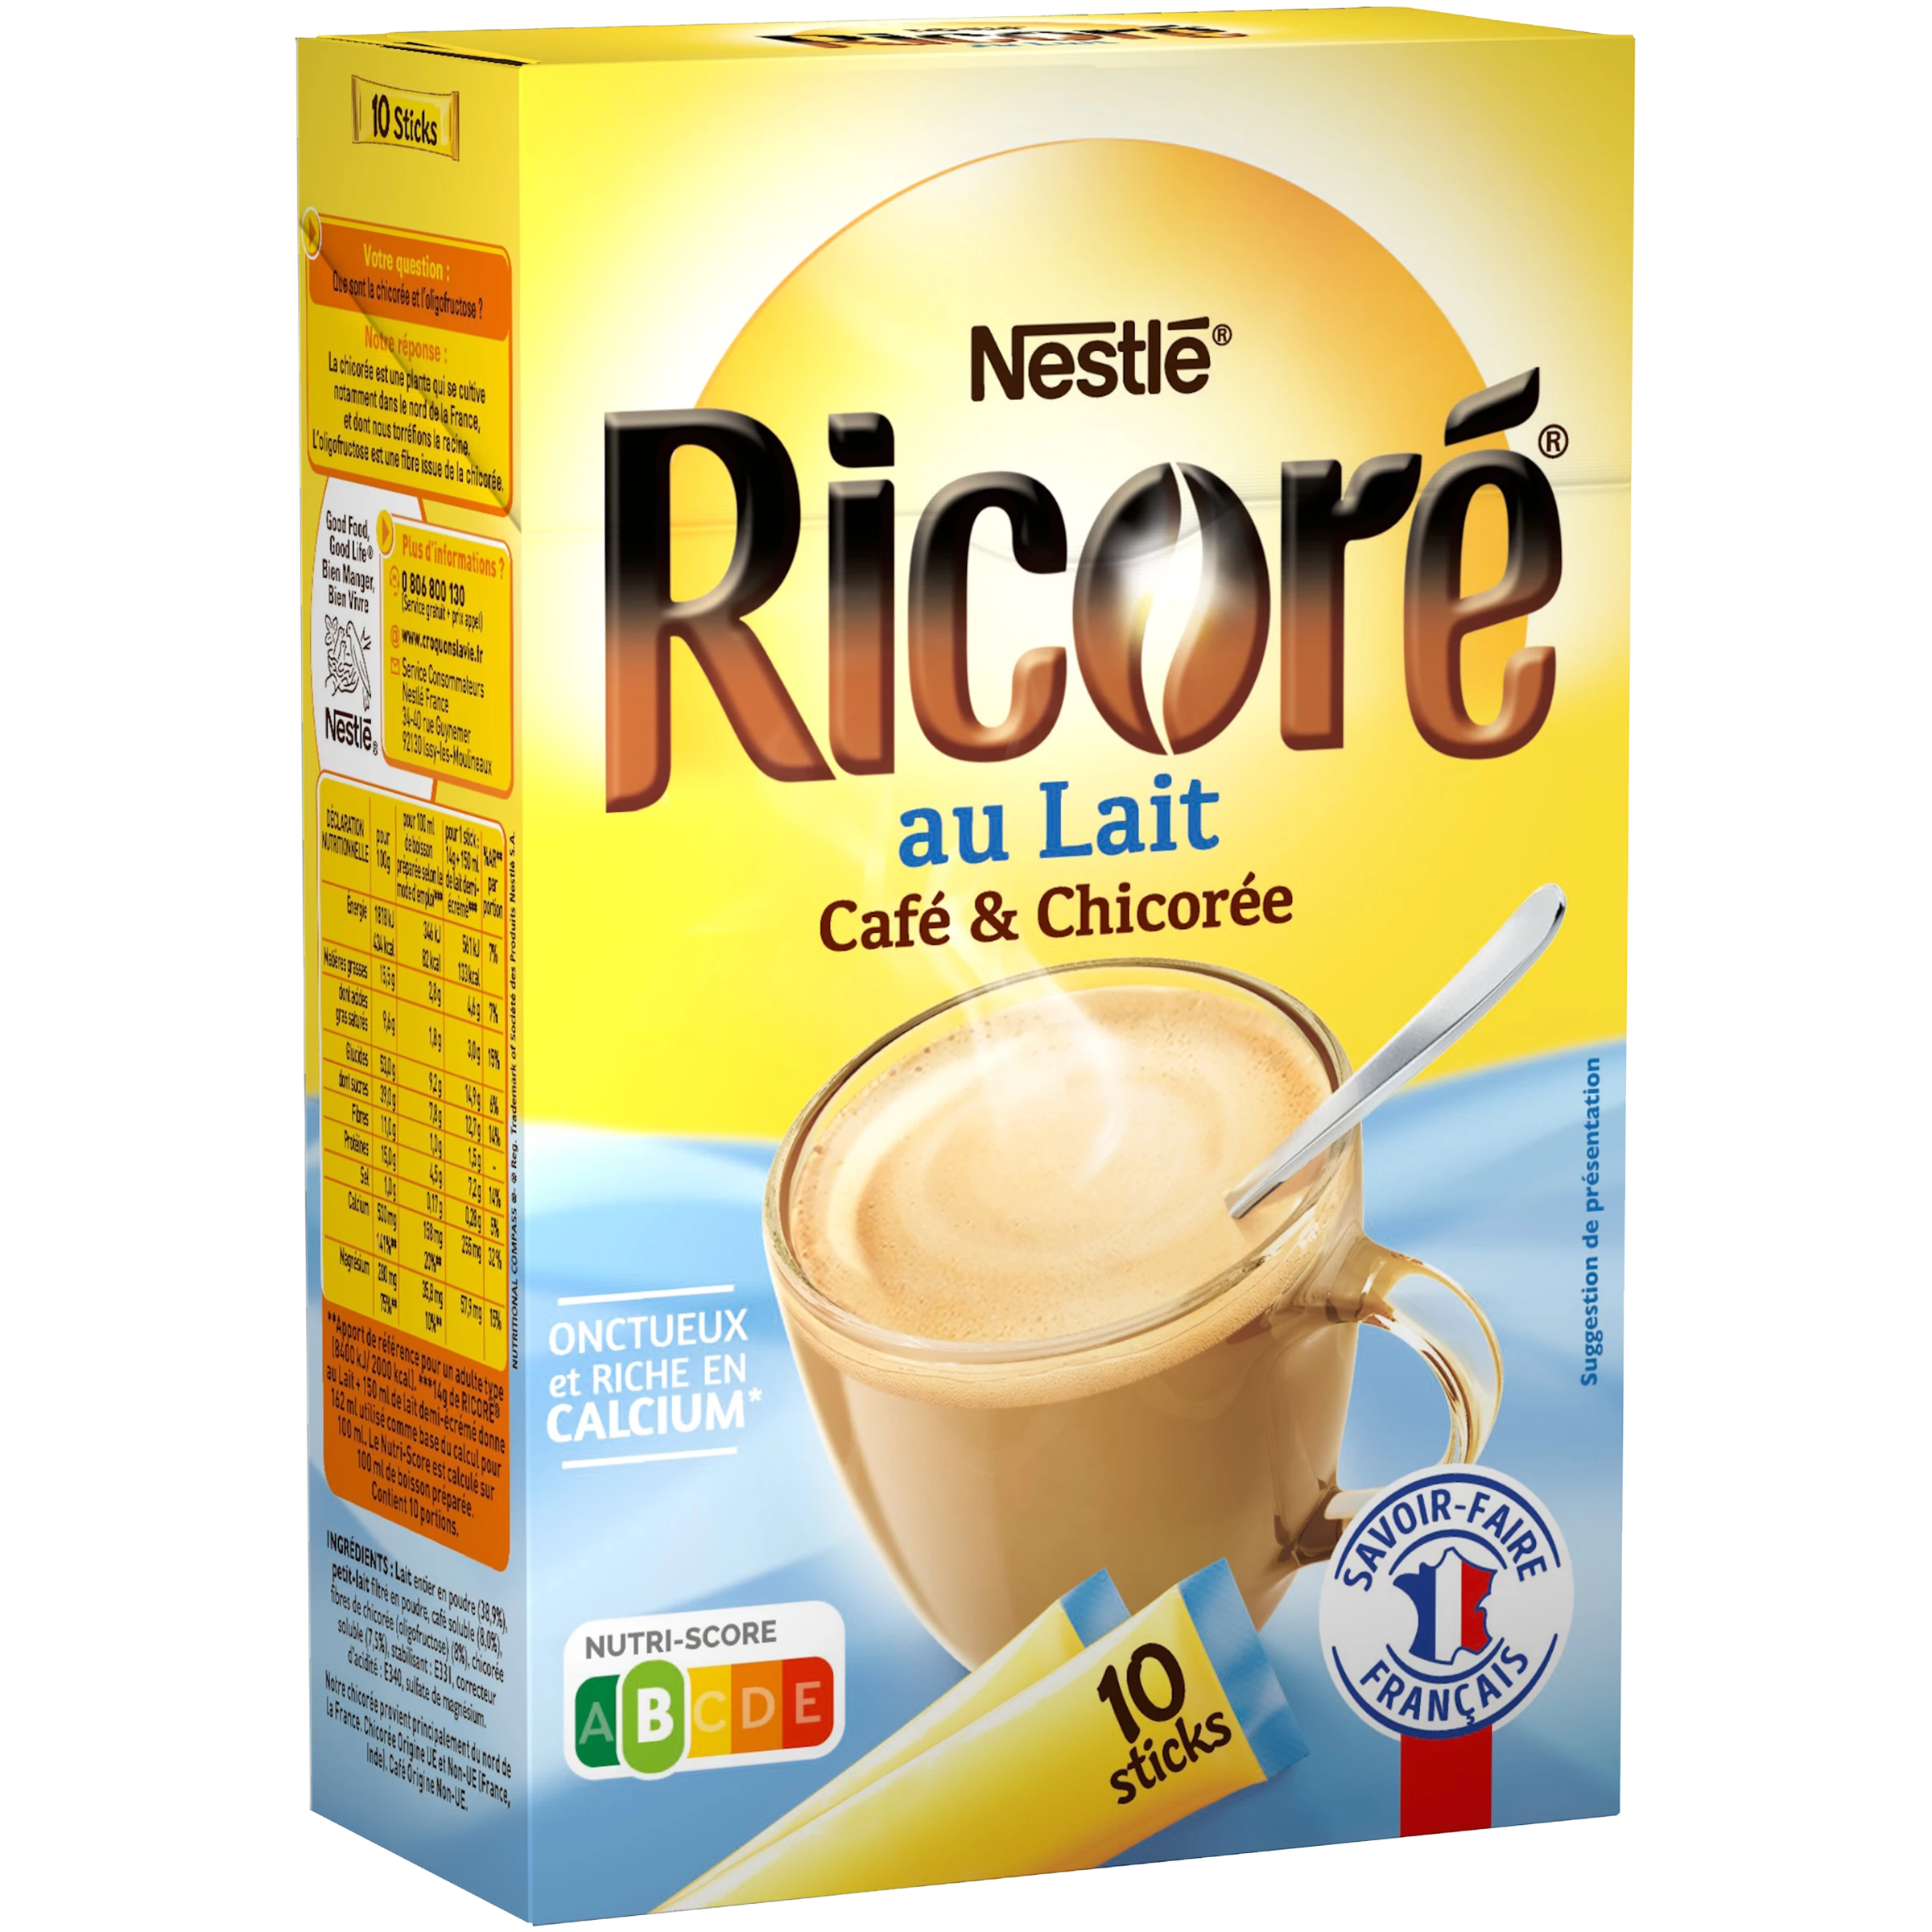 Kaffee und Chicorée mit Ricoré-Milch; 10 Stöcke; 140g - NESTLE